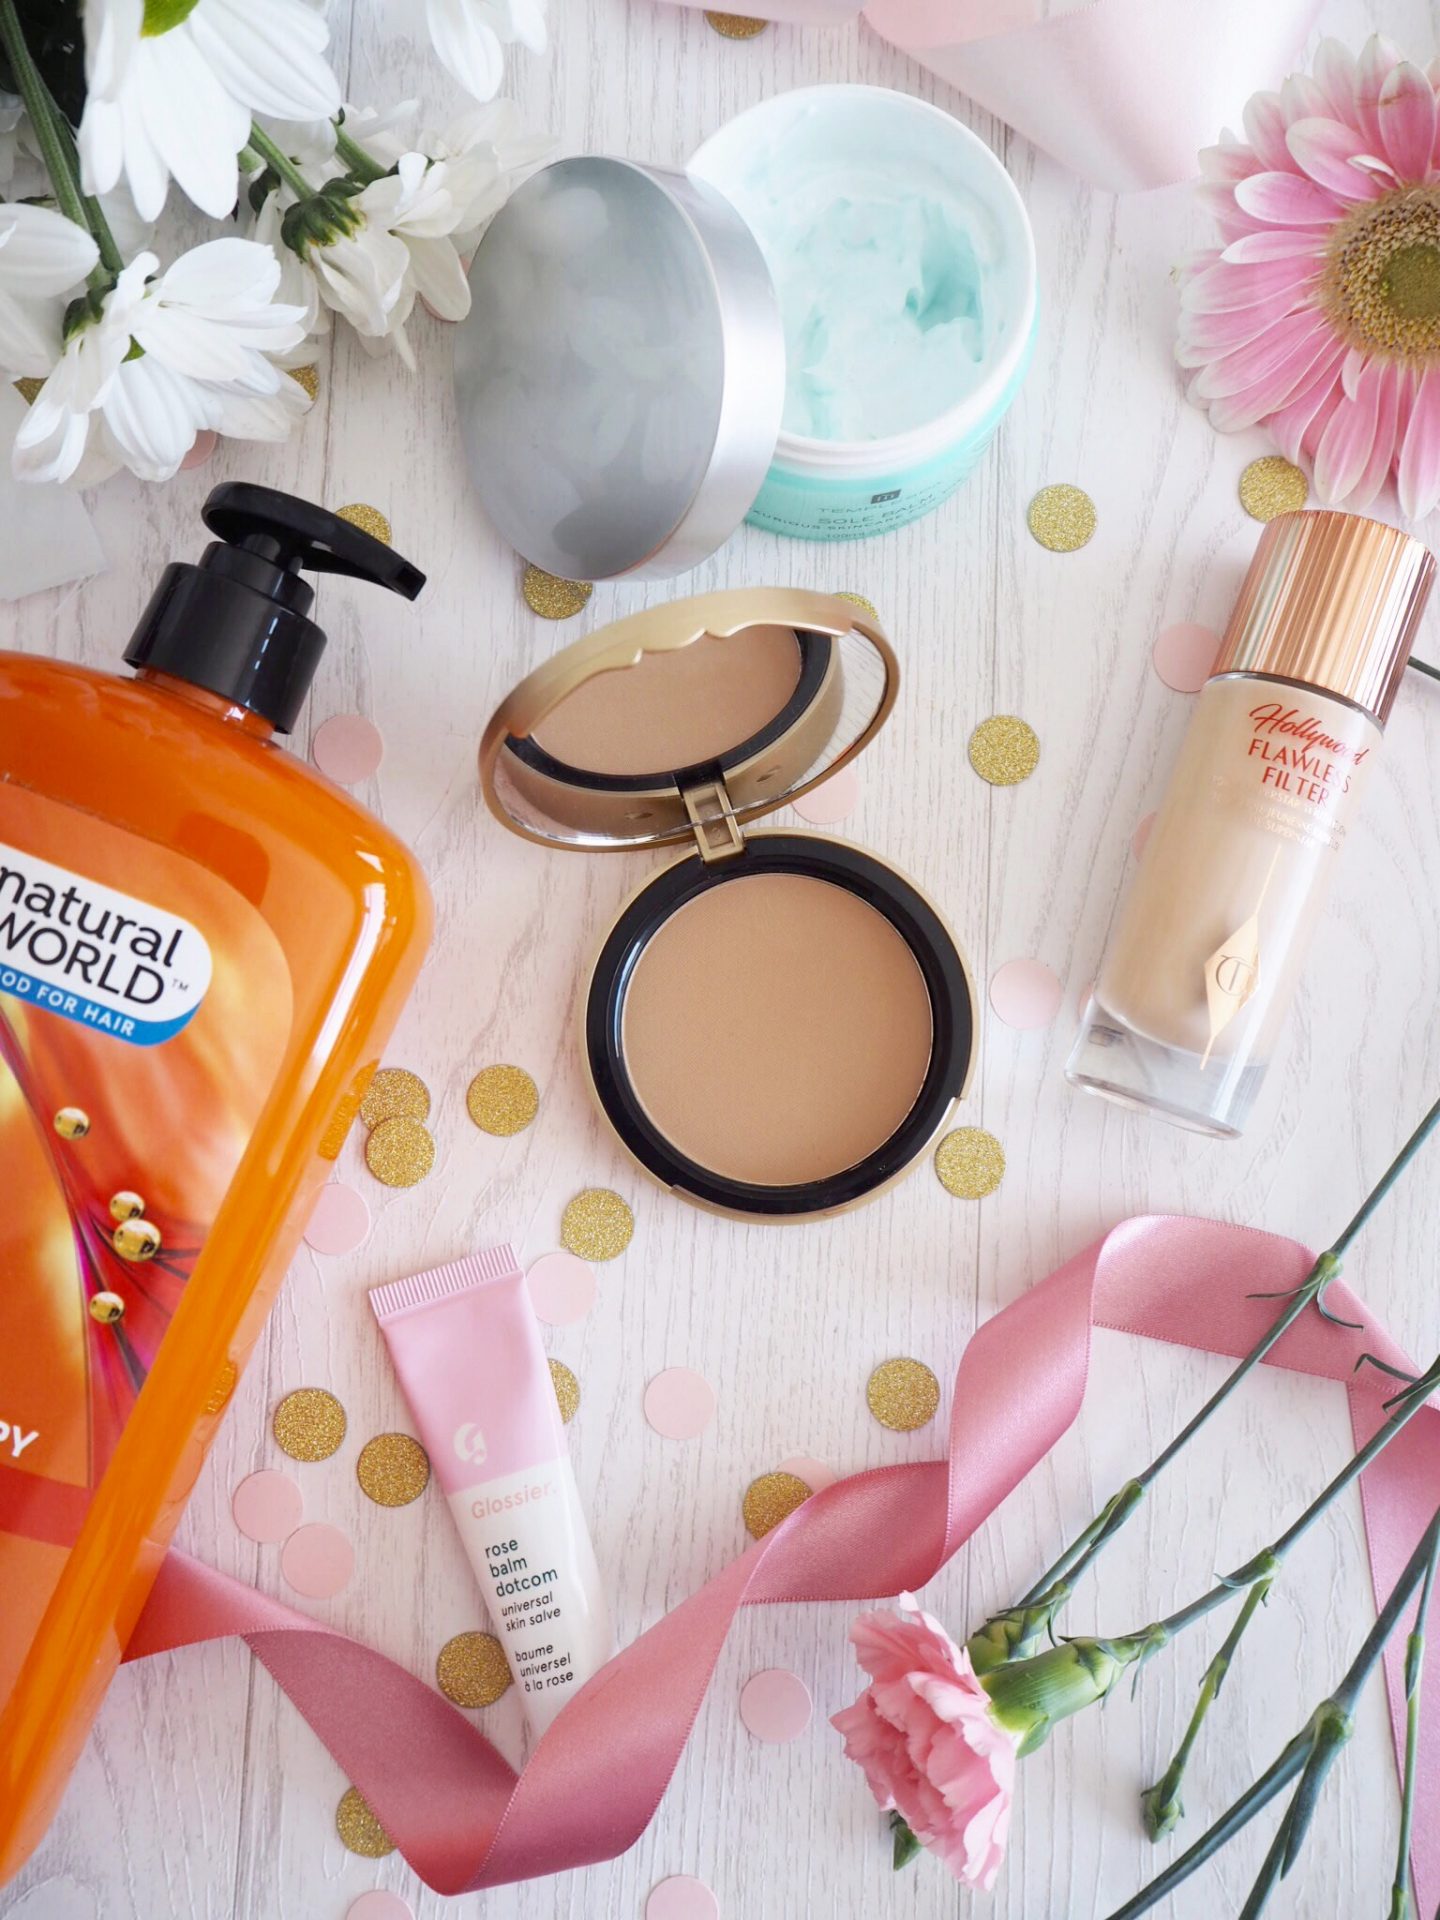 Beauty Favourites skincare makeup temple Spa too faced bronzer shampoo conditioner glossier balm dot com